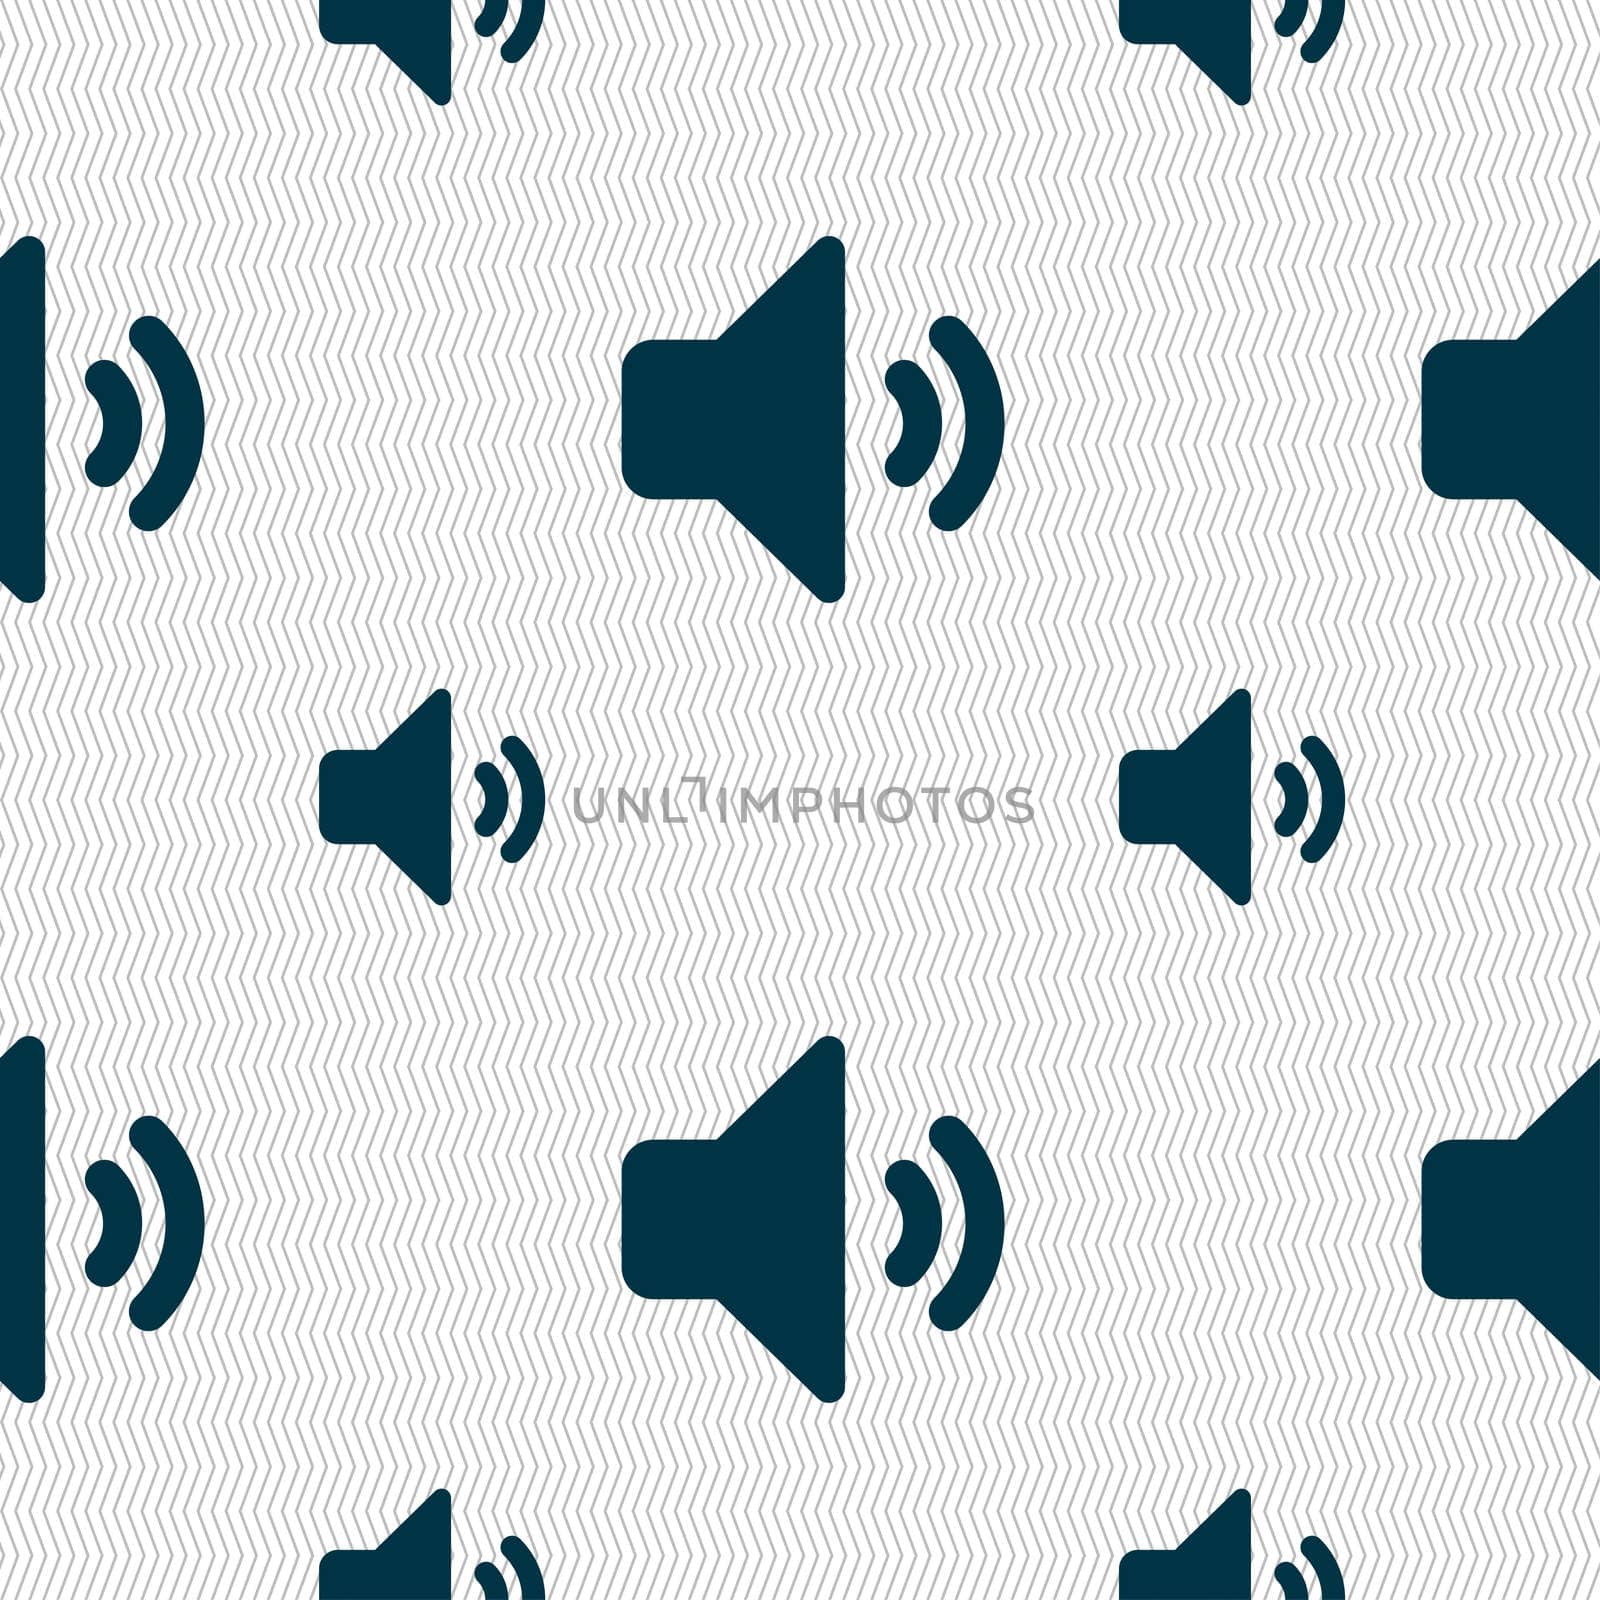 Speaker volume, Sound icon sign. Seamless pattern with geometric texture. illustration